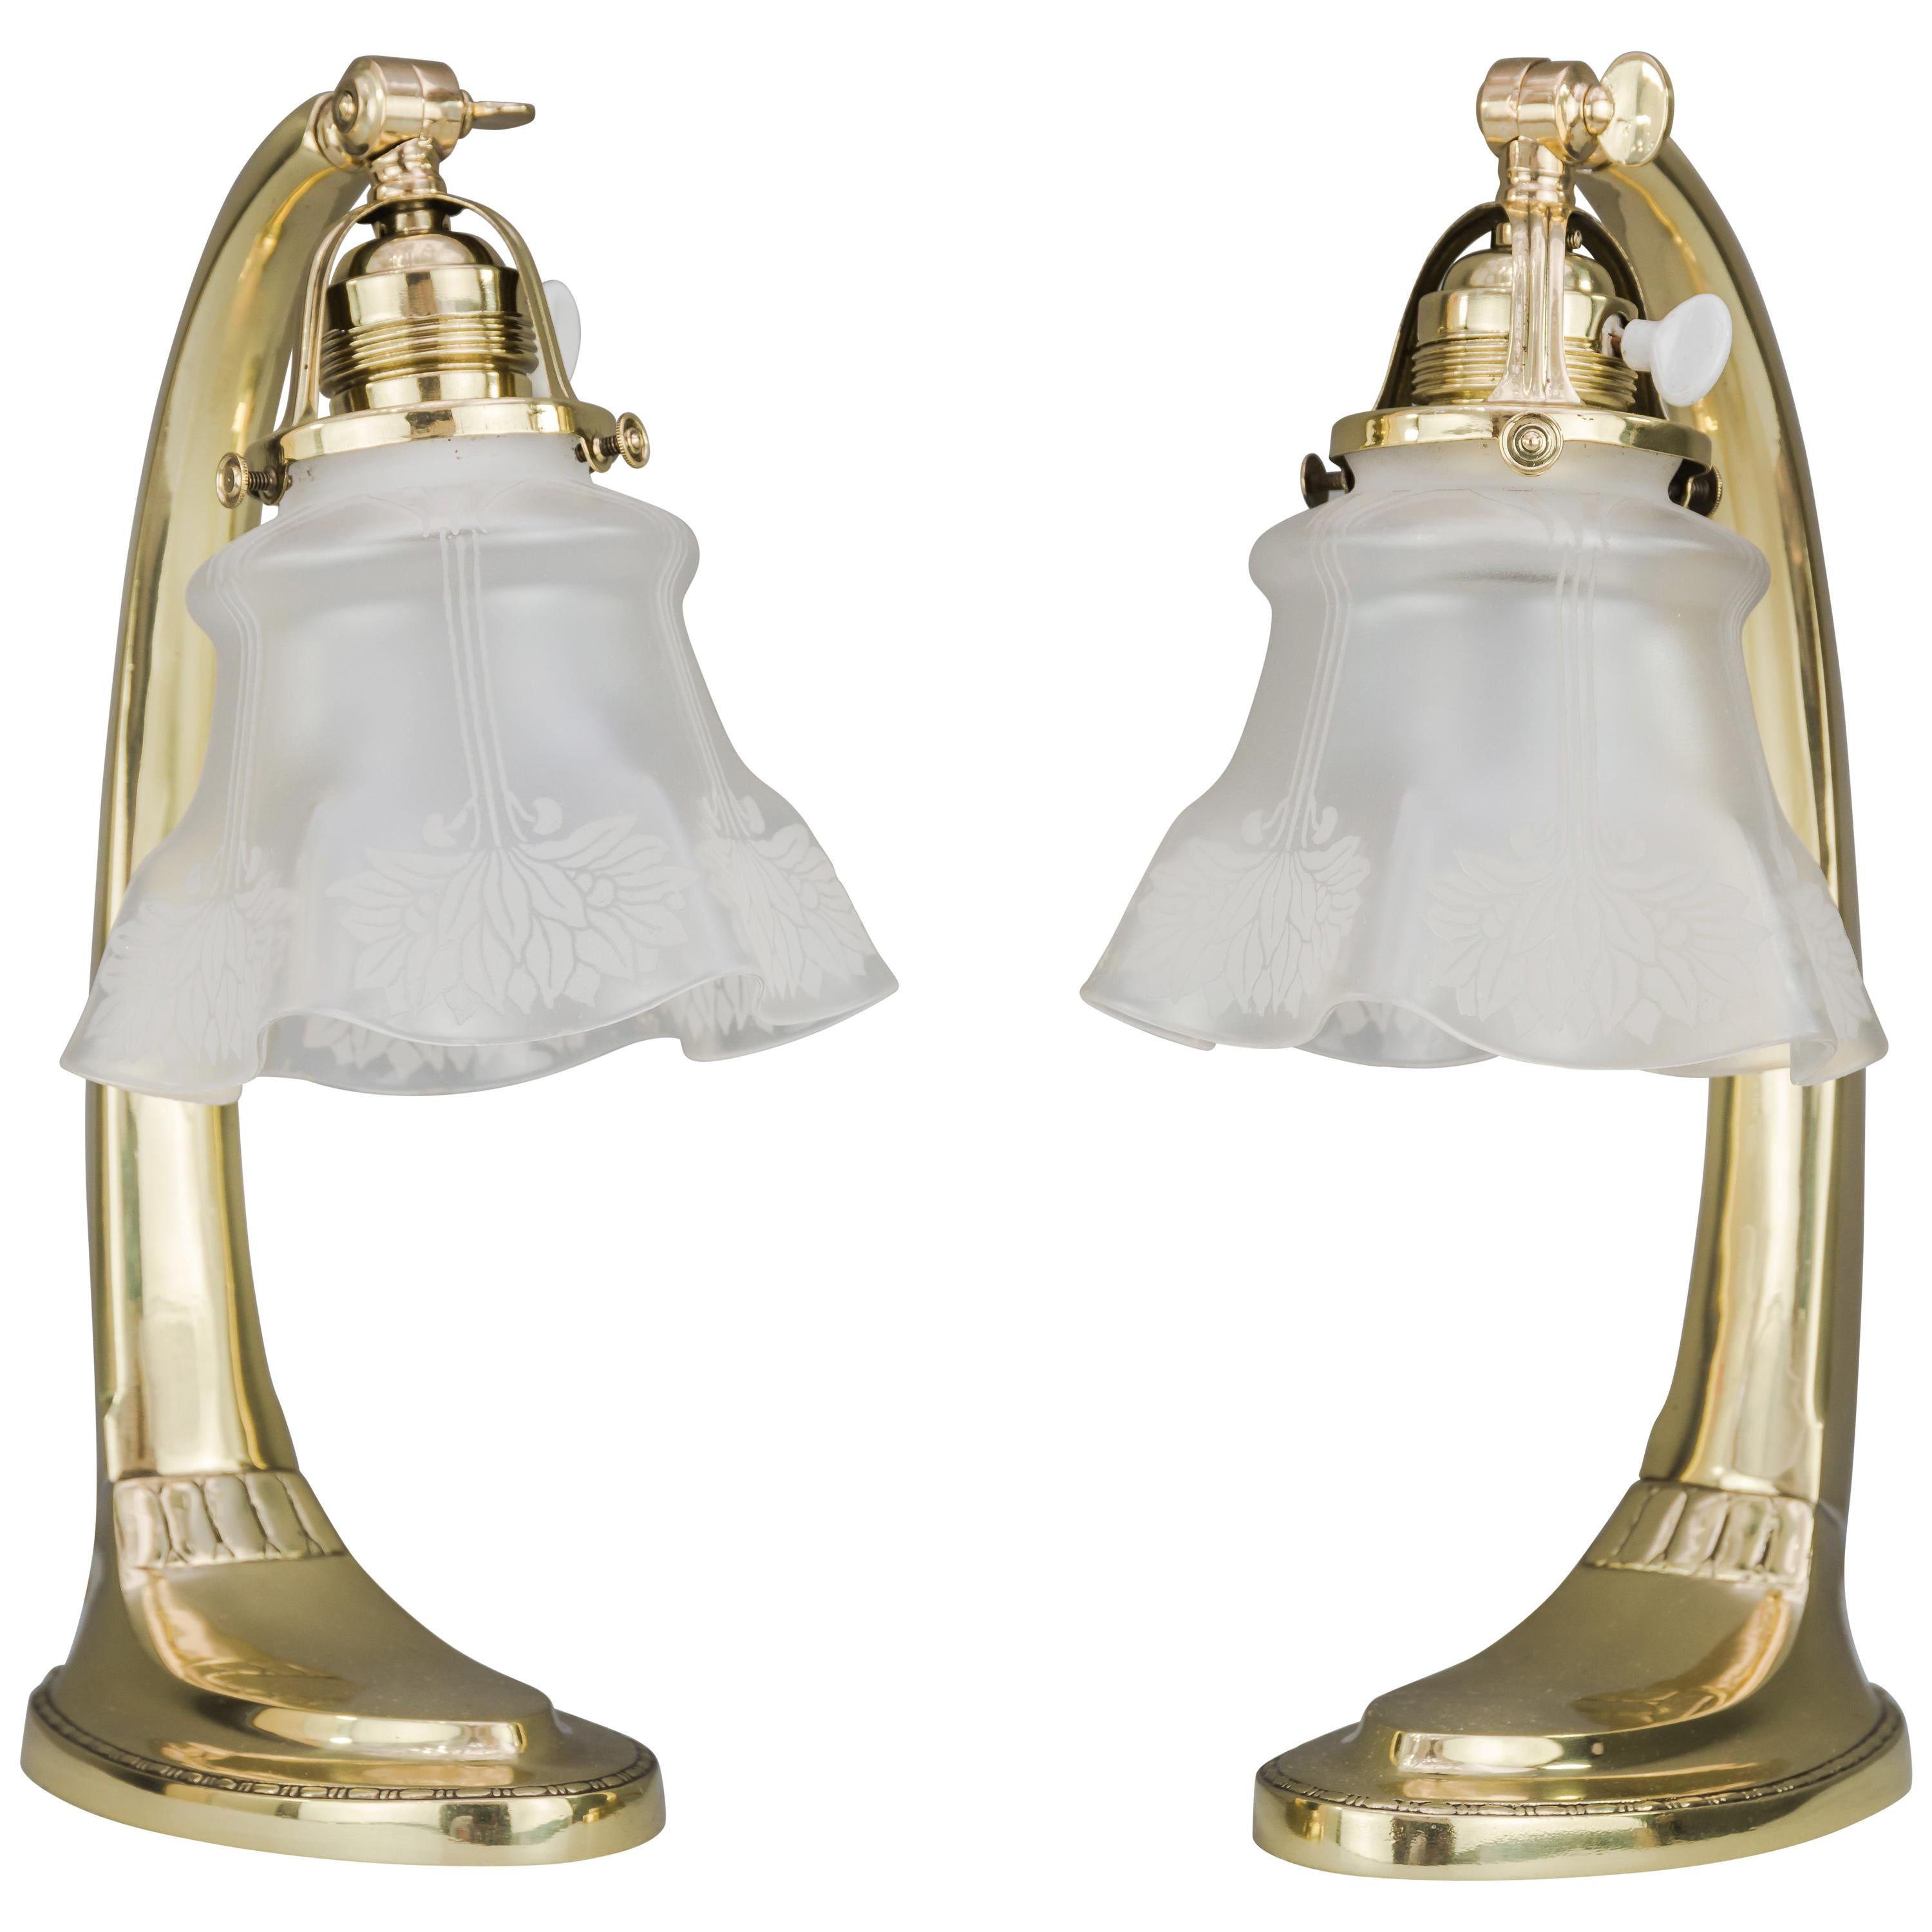 Two Jugendstil Table Lamps 1907 with Original Glas Shades For Sale